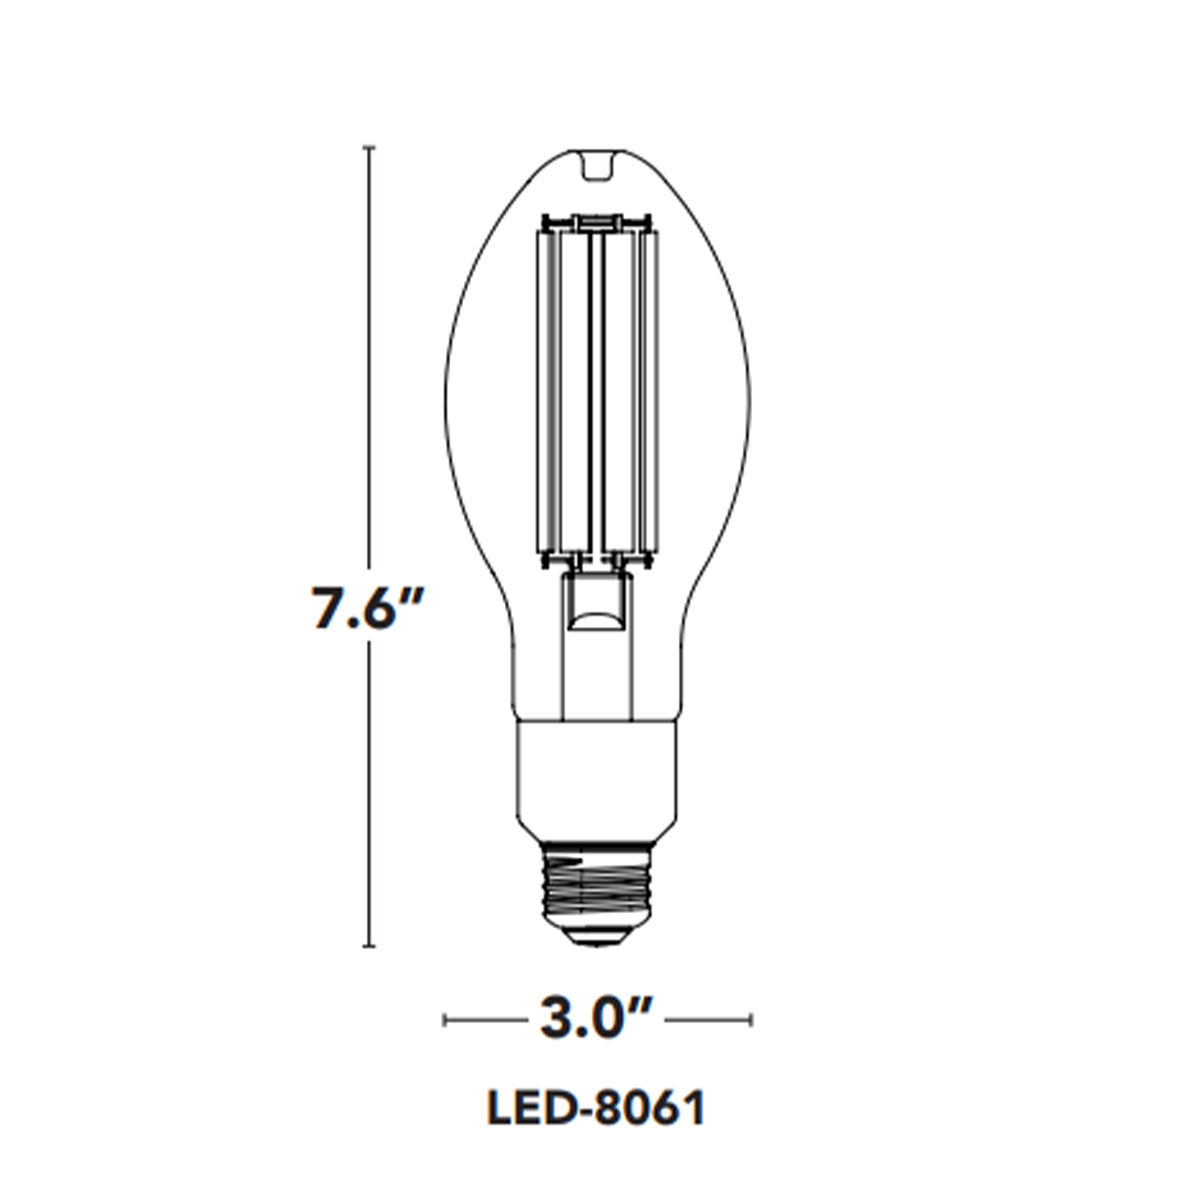 ED23 Filament Style Retrofit Bulb, 150W HID, 28 Watt, 3500 Lumens, 2200K, E26 Medium Base, Clear Finish